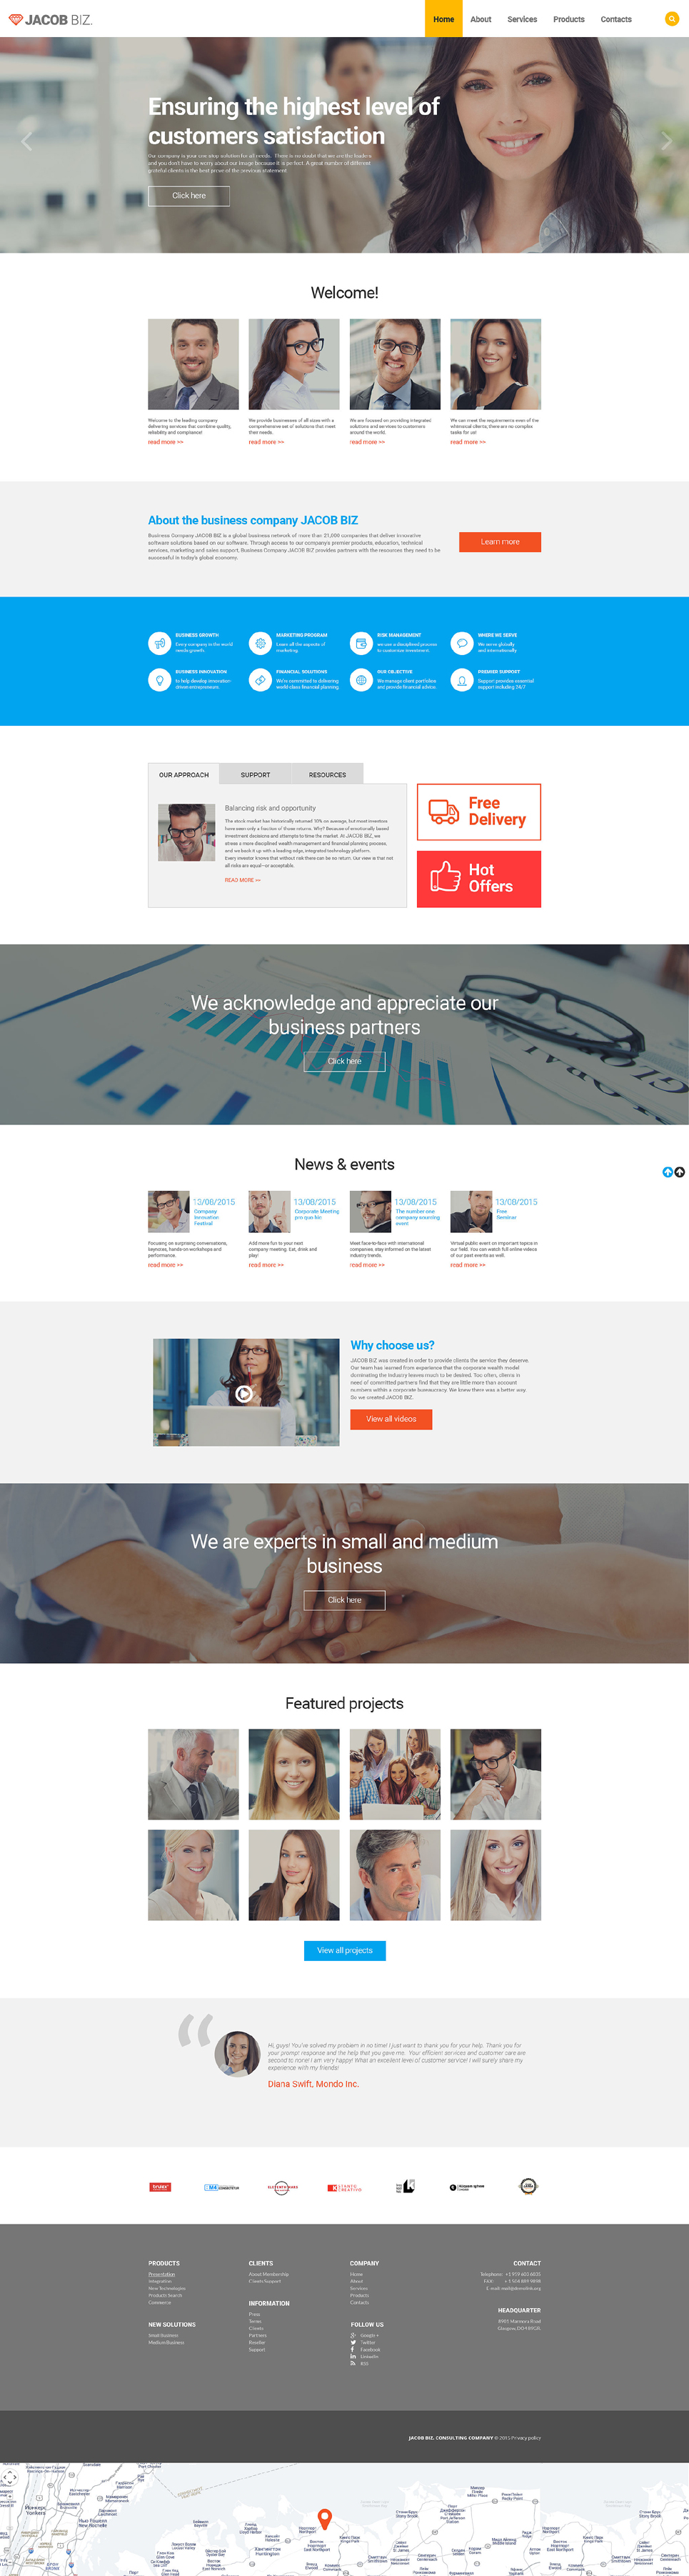 Business Responsive Website Template New Screenshots BIG